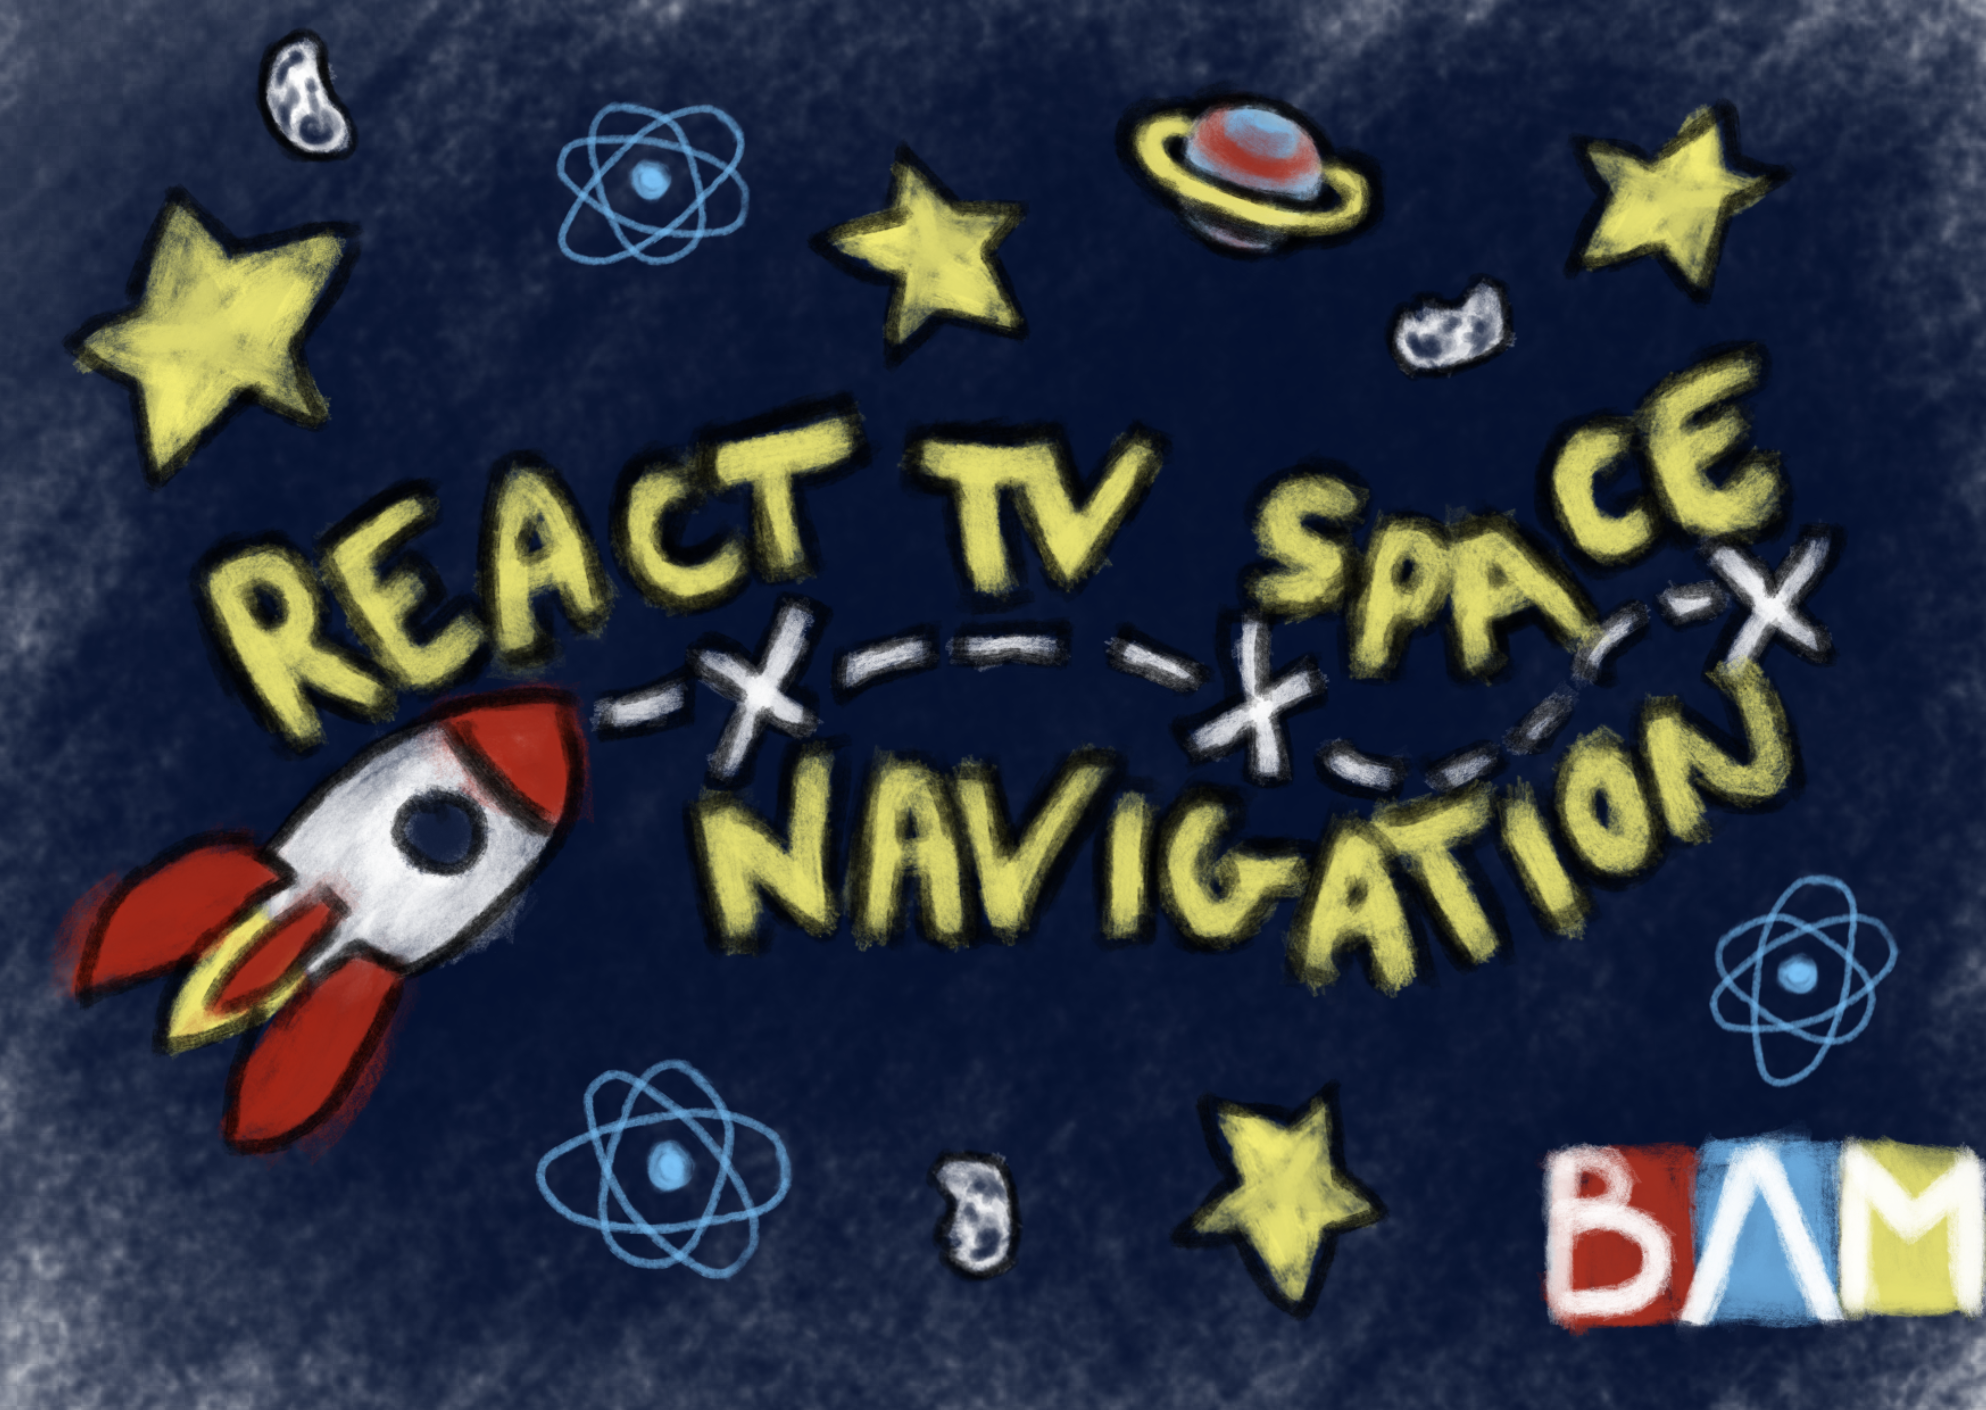 React TV Space Navigation Banner